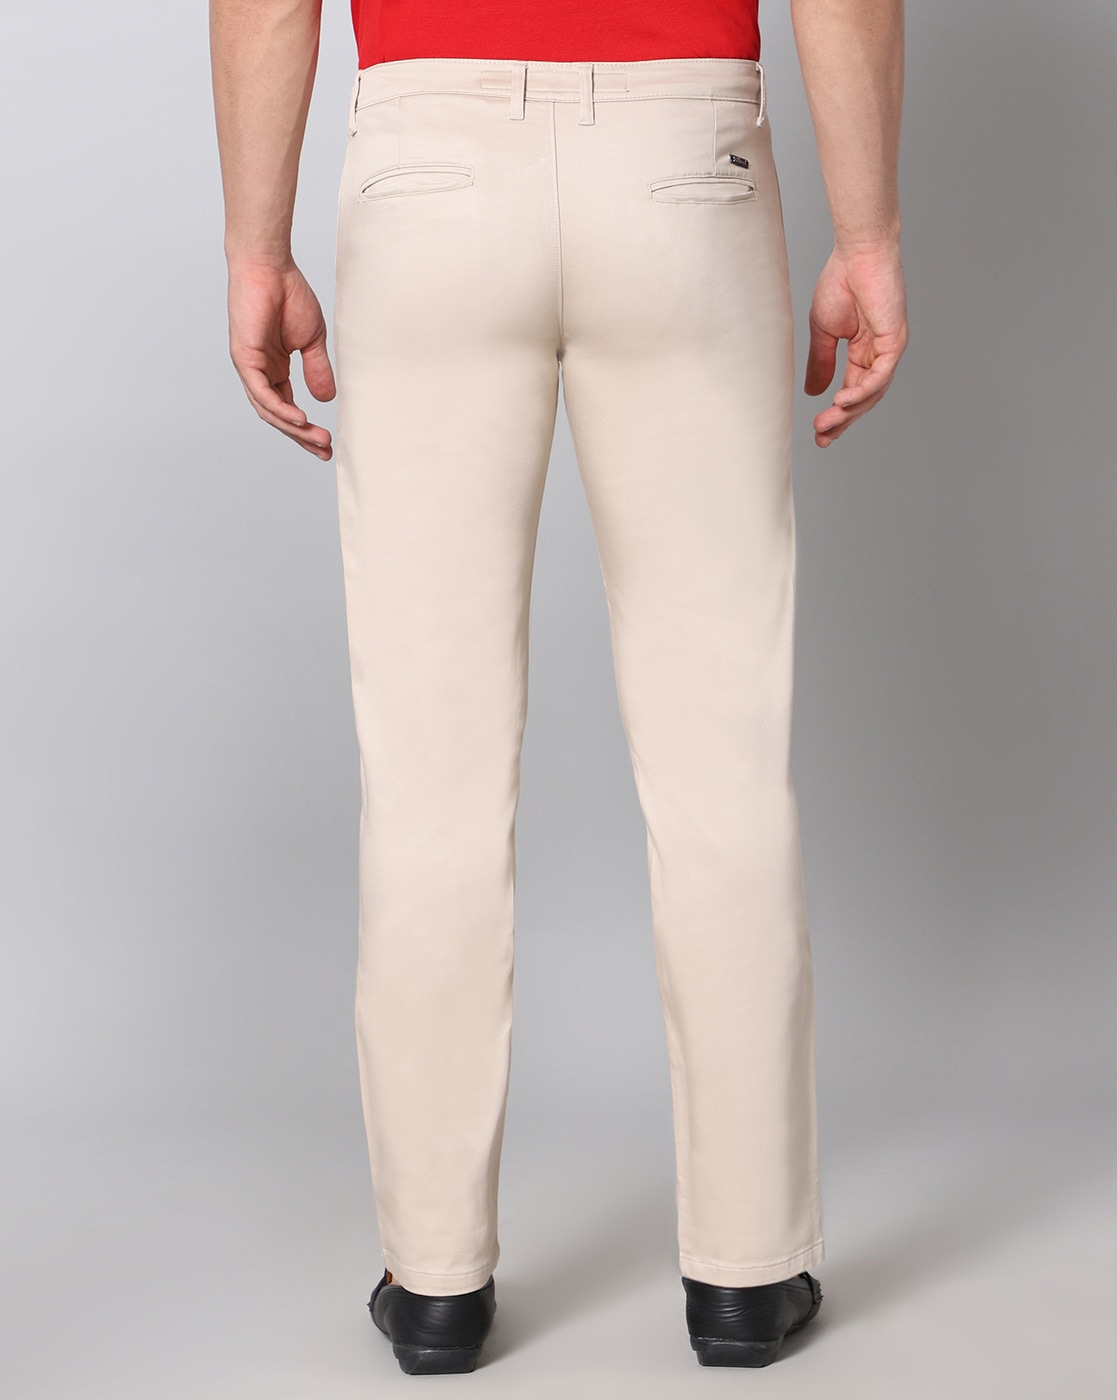 Prestige Cream Plaid Pants 405 – Cellini Uomo